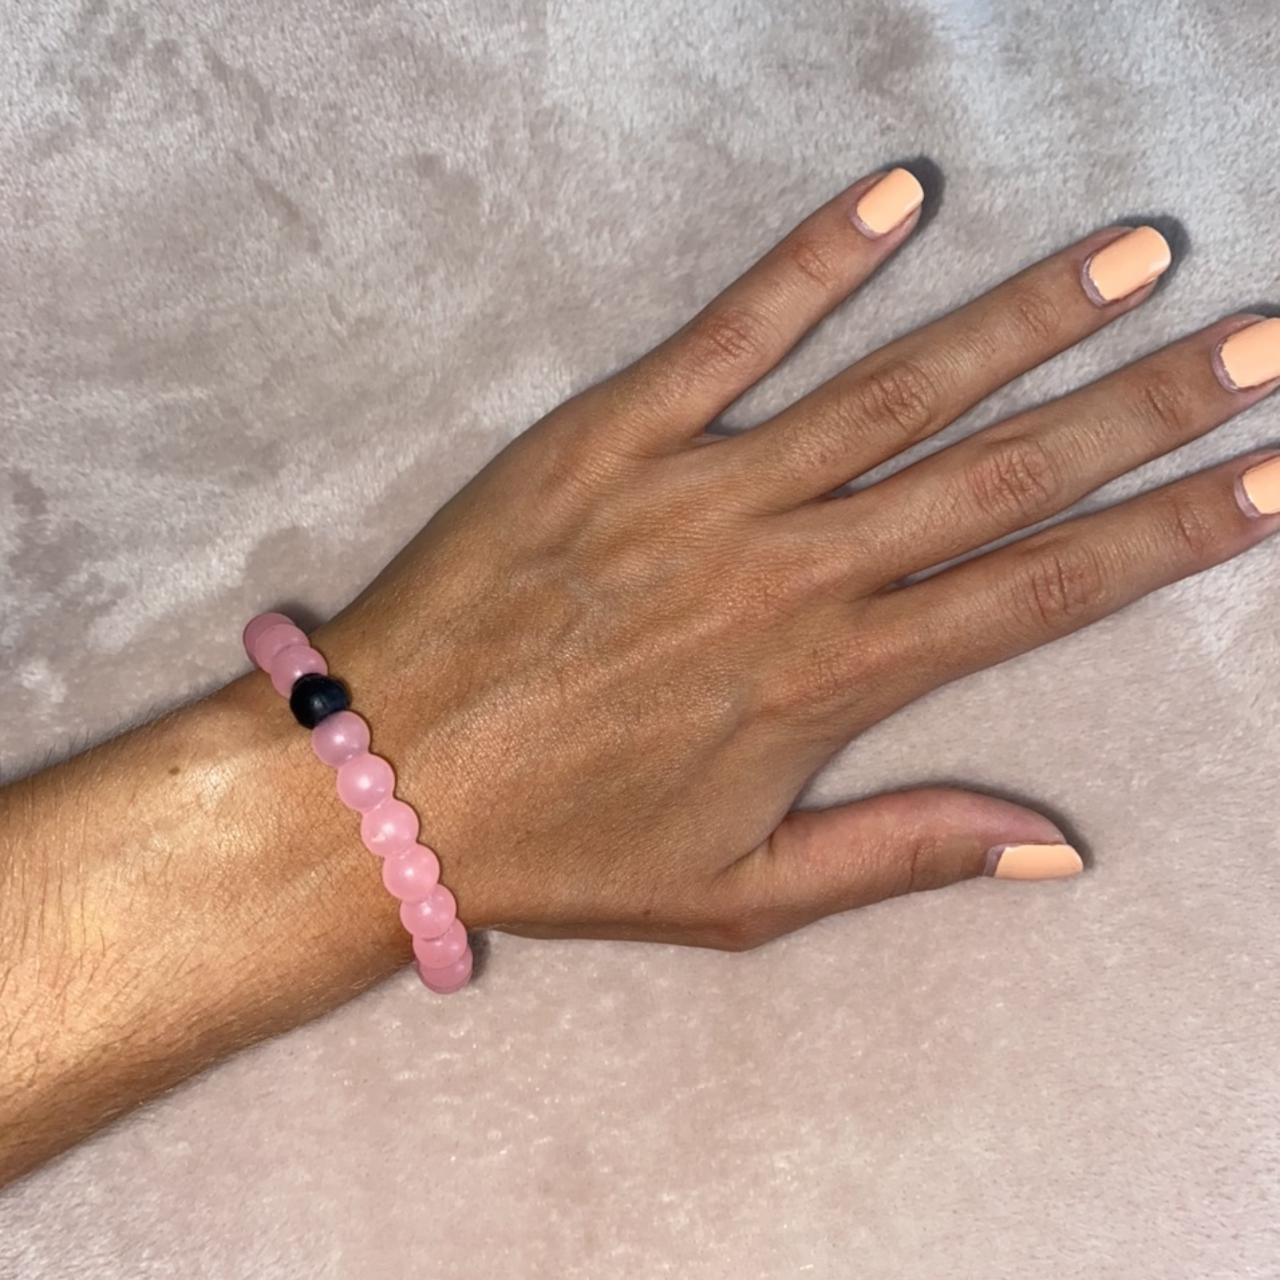 Lokai Pink Bracelet - $8 (60% Off Retail) - From Makenna